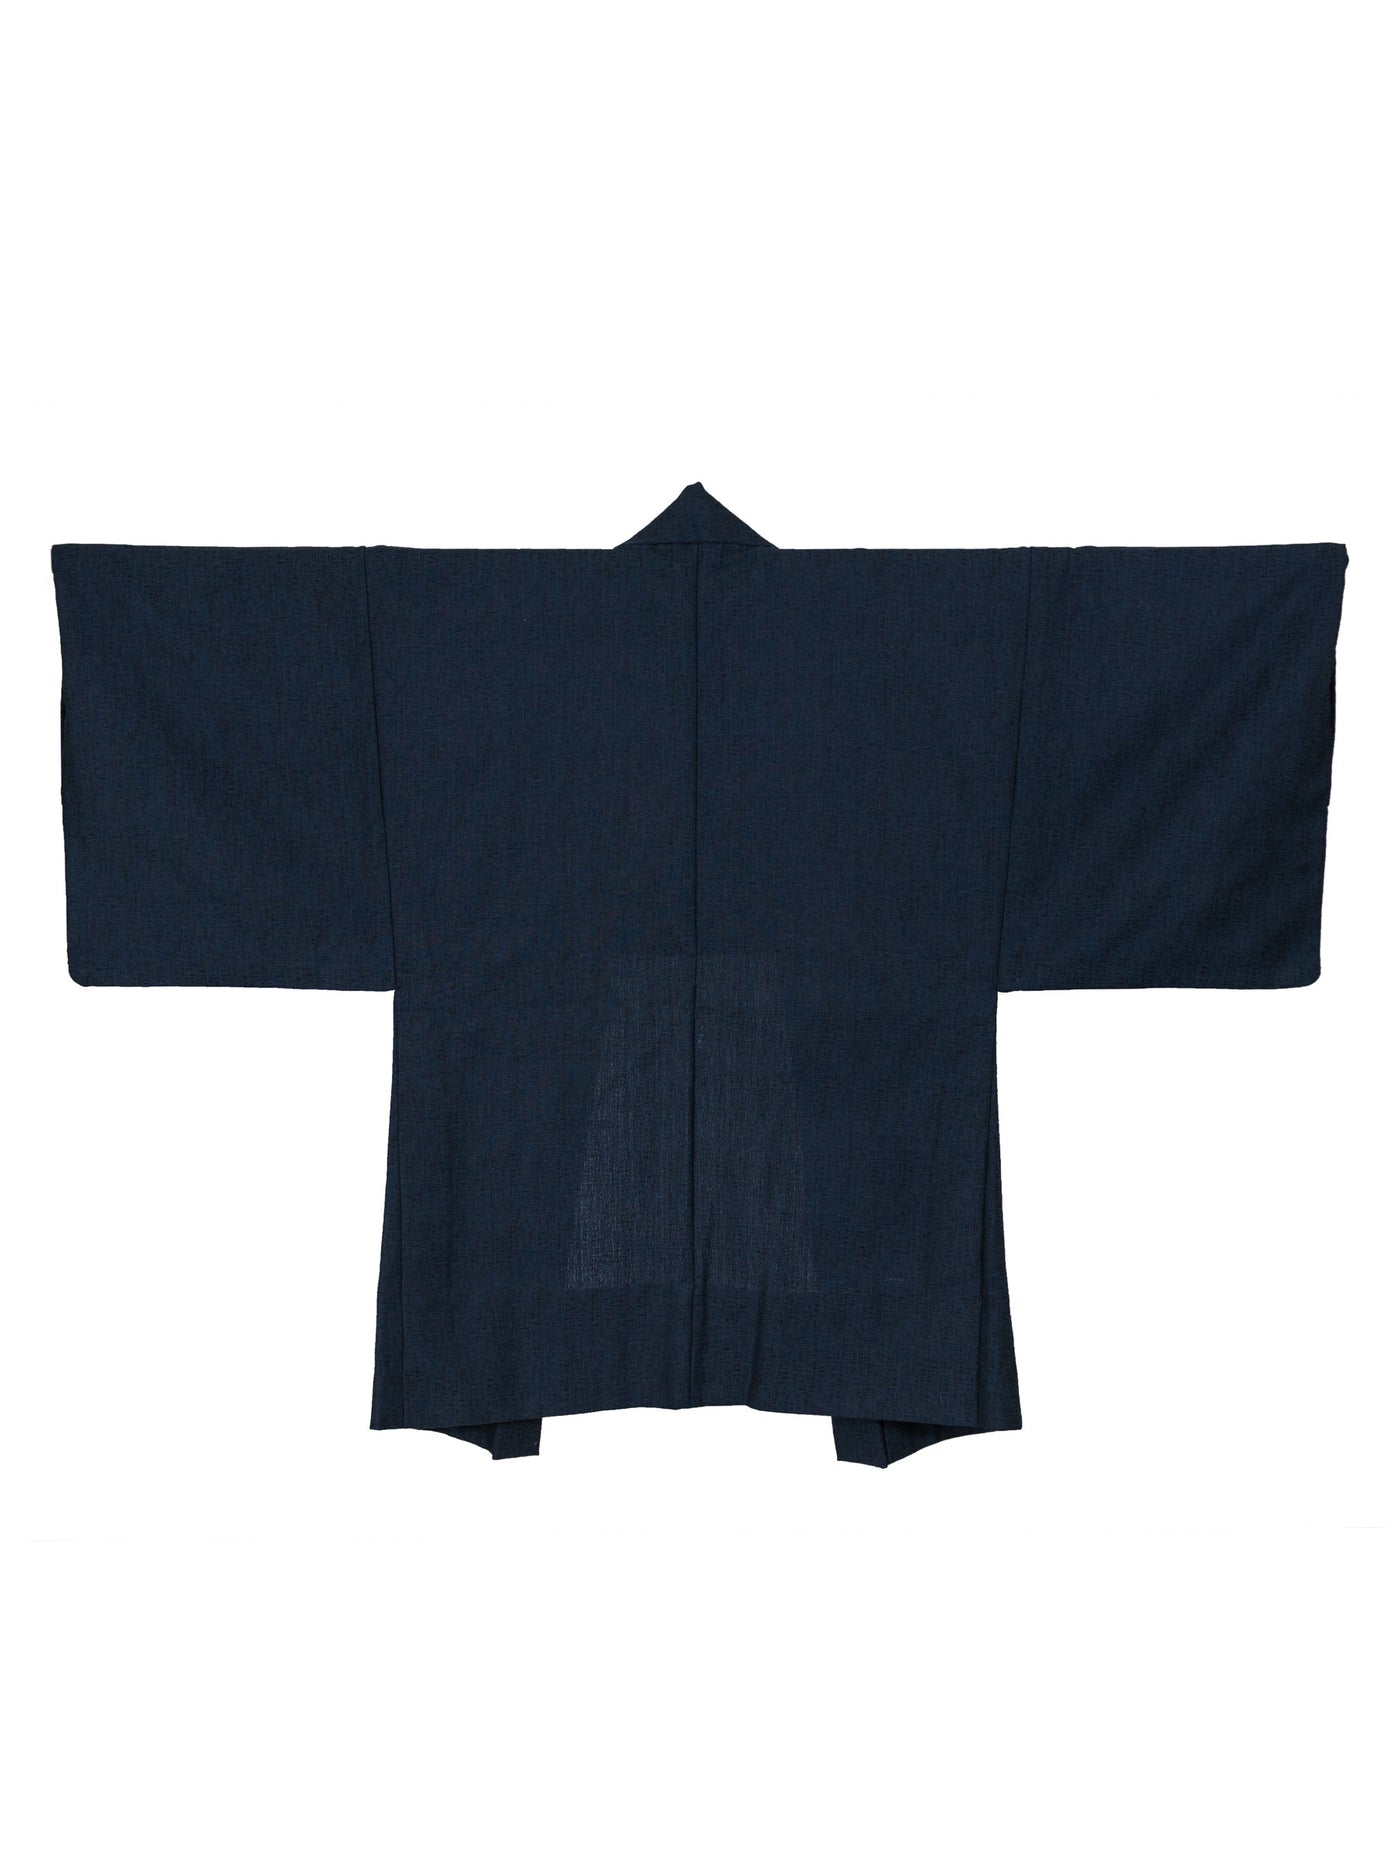 Vintage Saifu Men's Haori Jacket